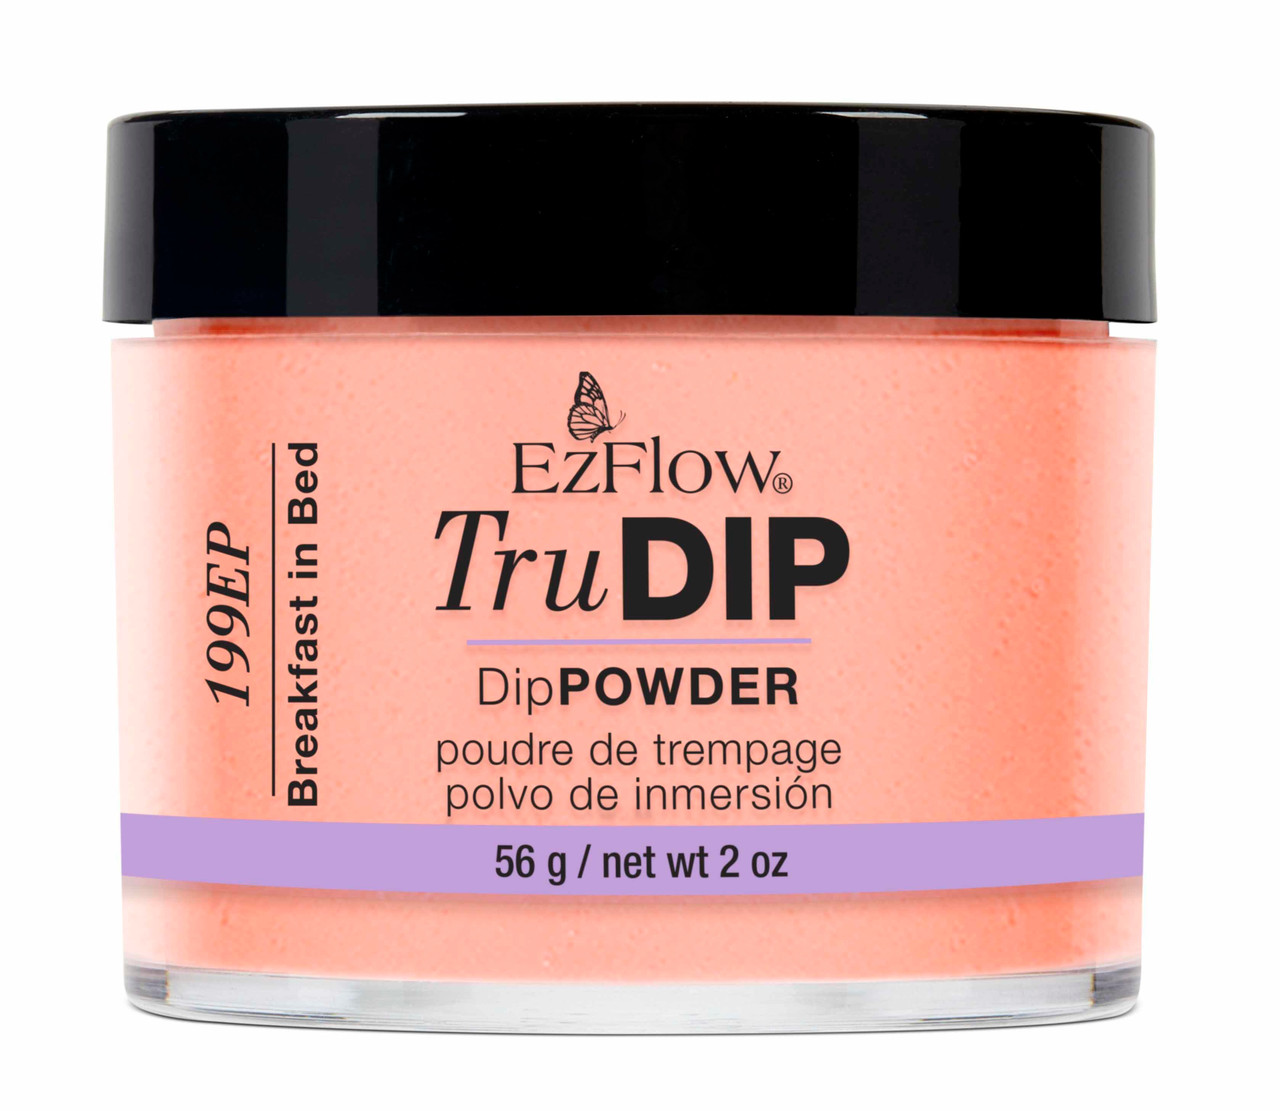 EZ TruDIP Dipping Powder Breakfast in Bed  - 2 oz